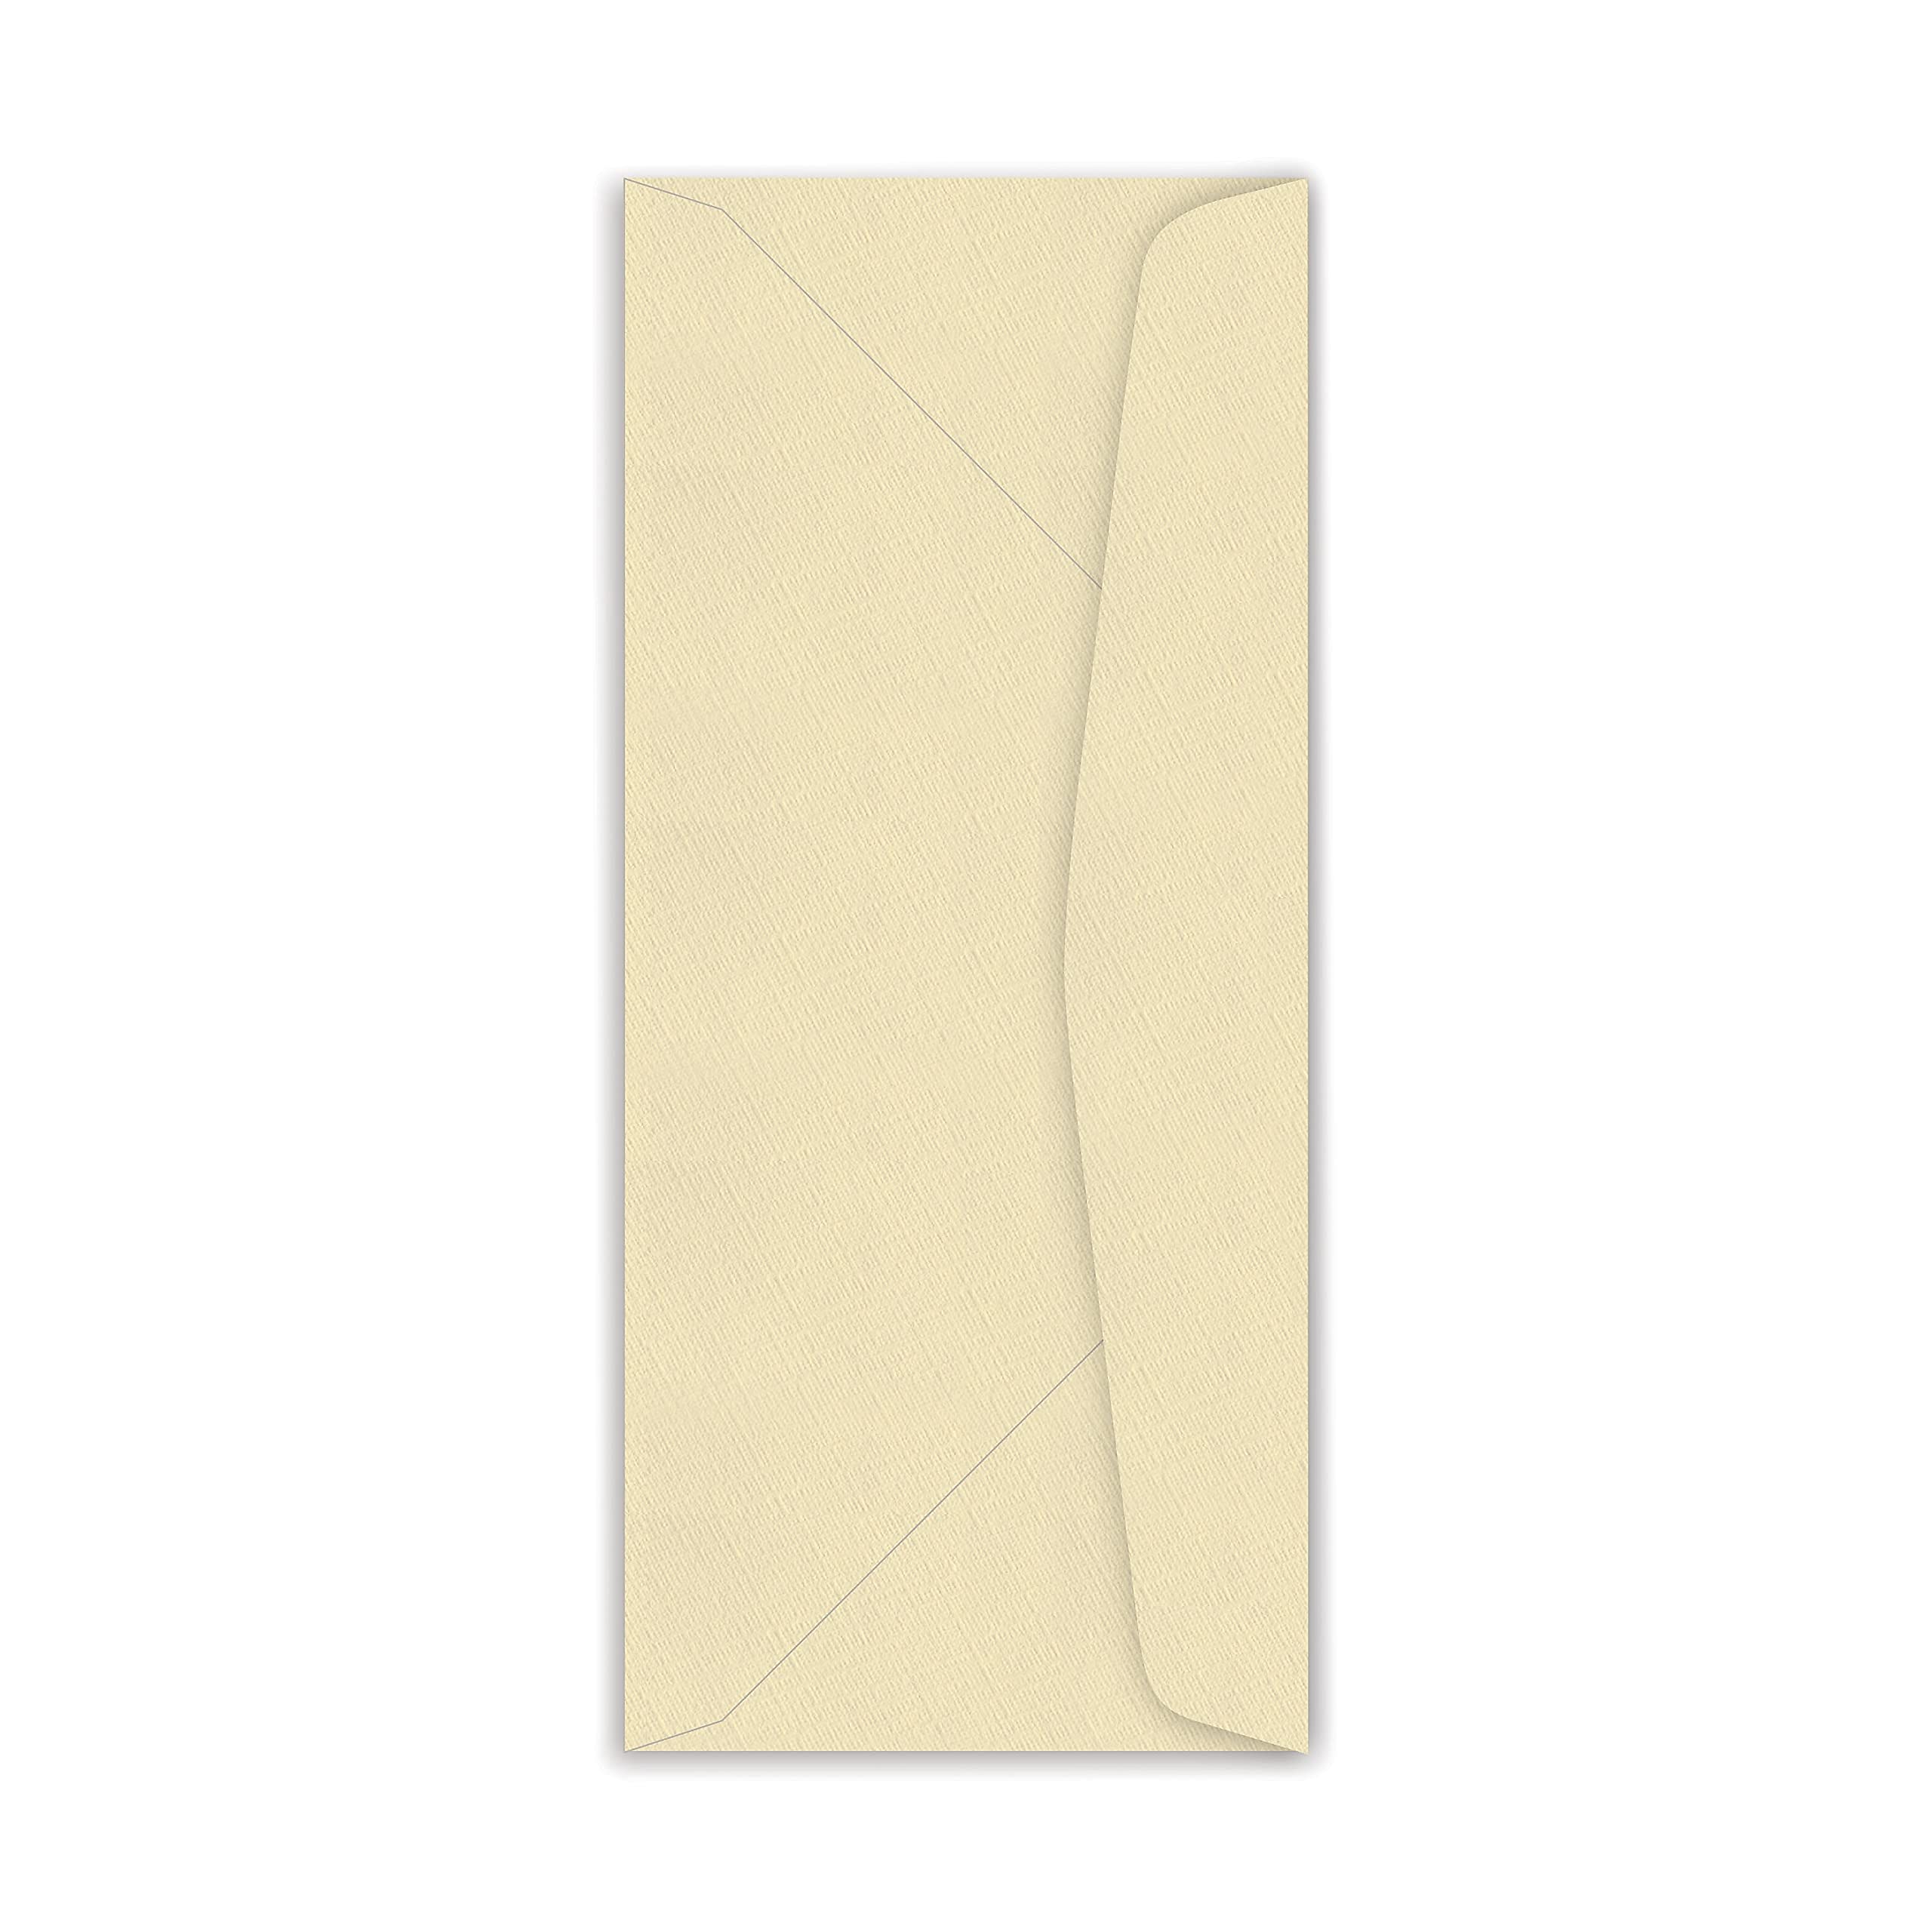 Southworth J56410 25% Cotton #10 Envelope Ivory 24 lbs. Linen 250/Box FSC